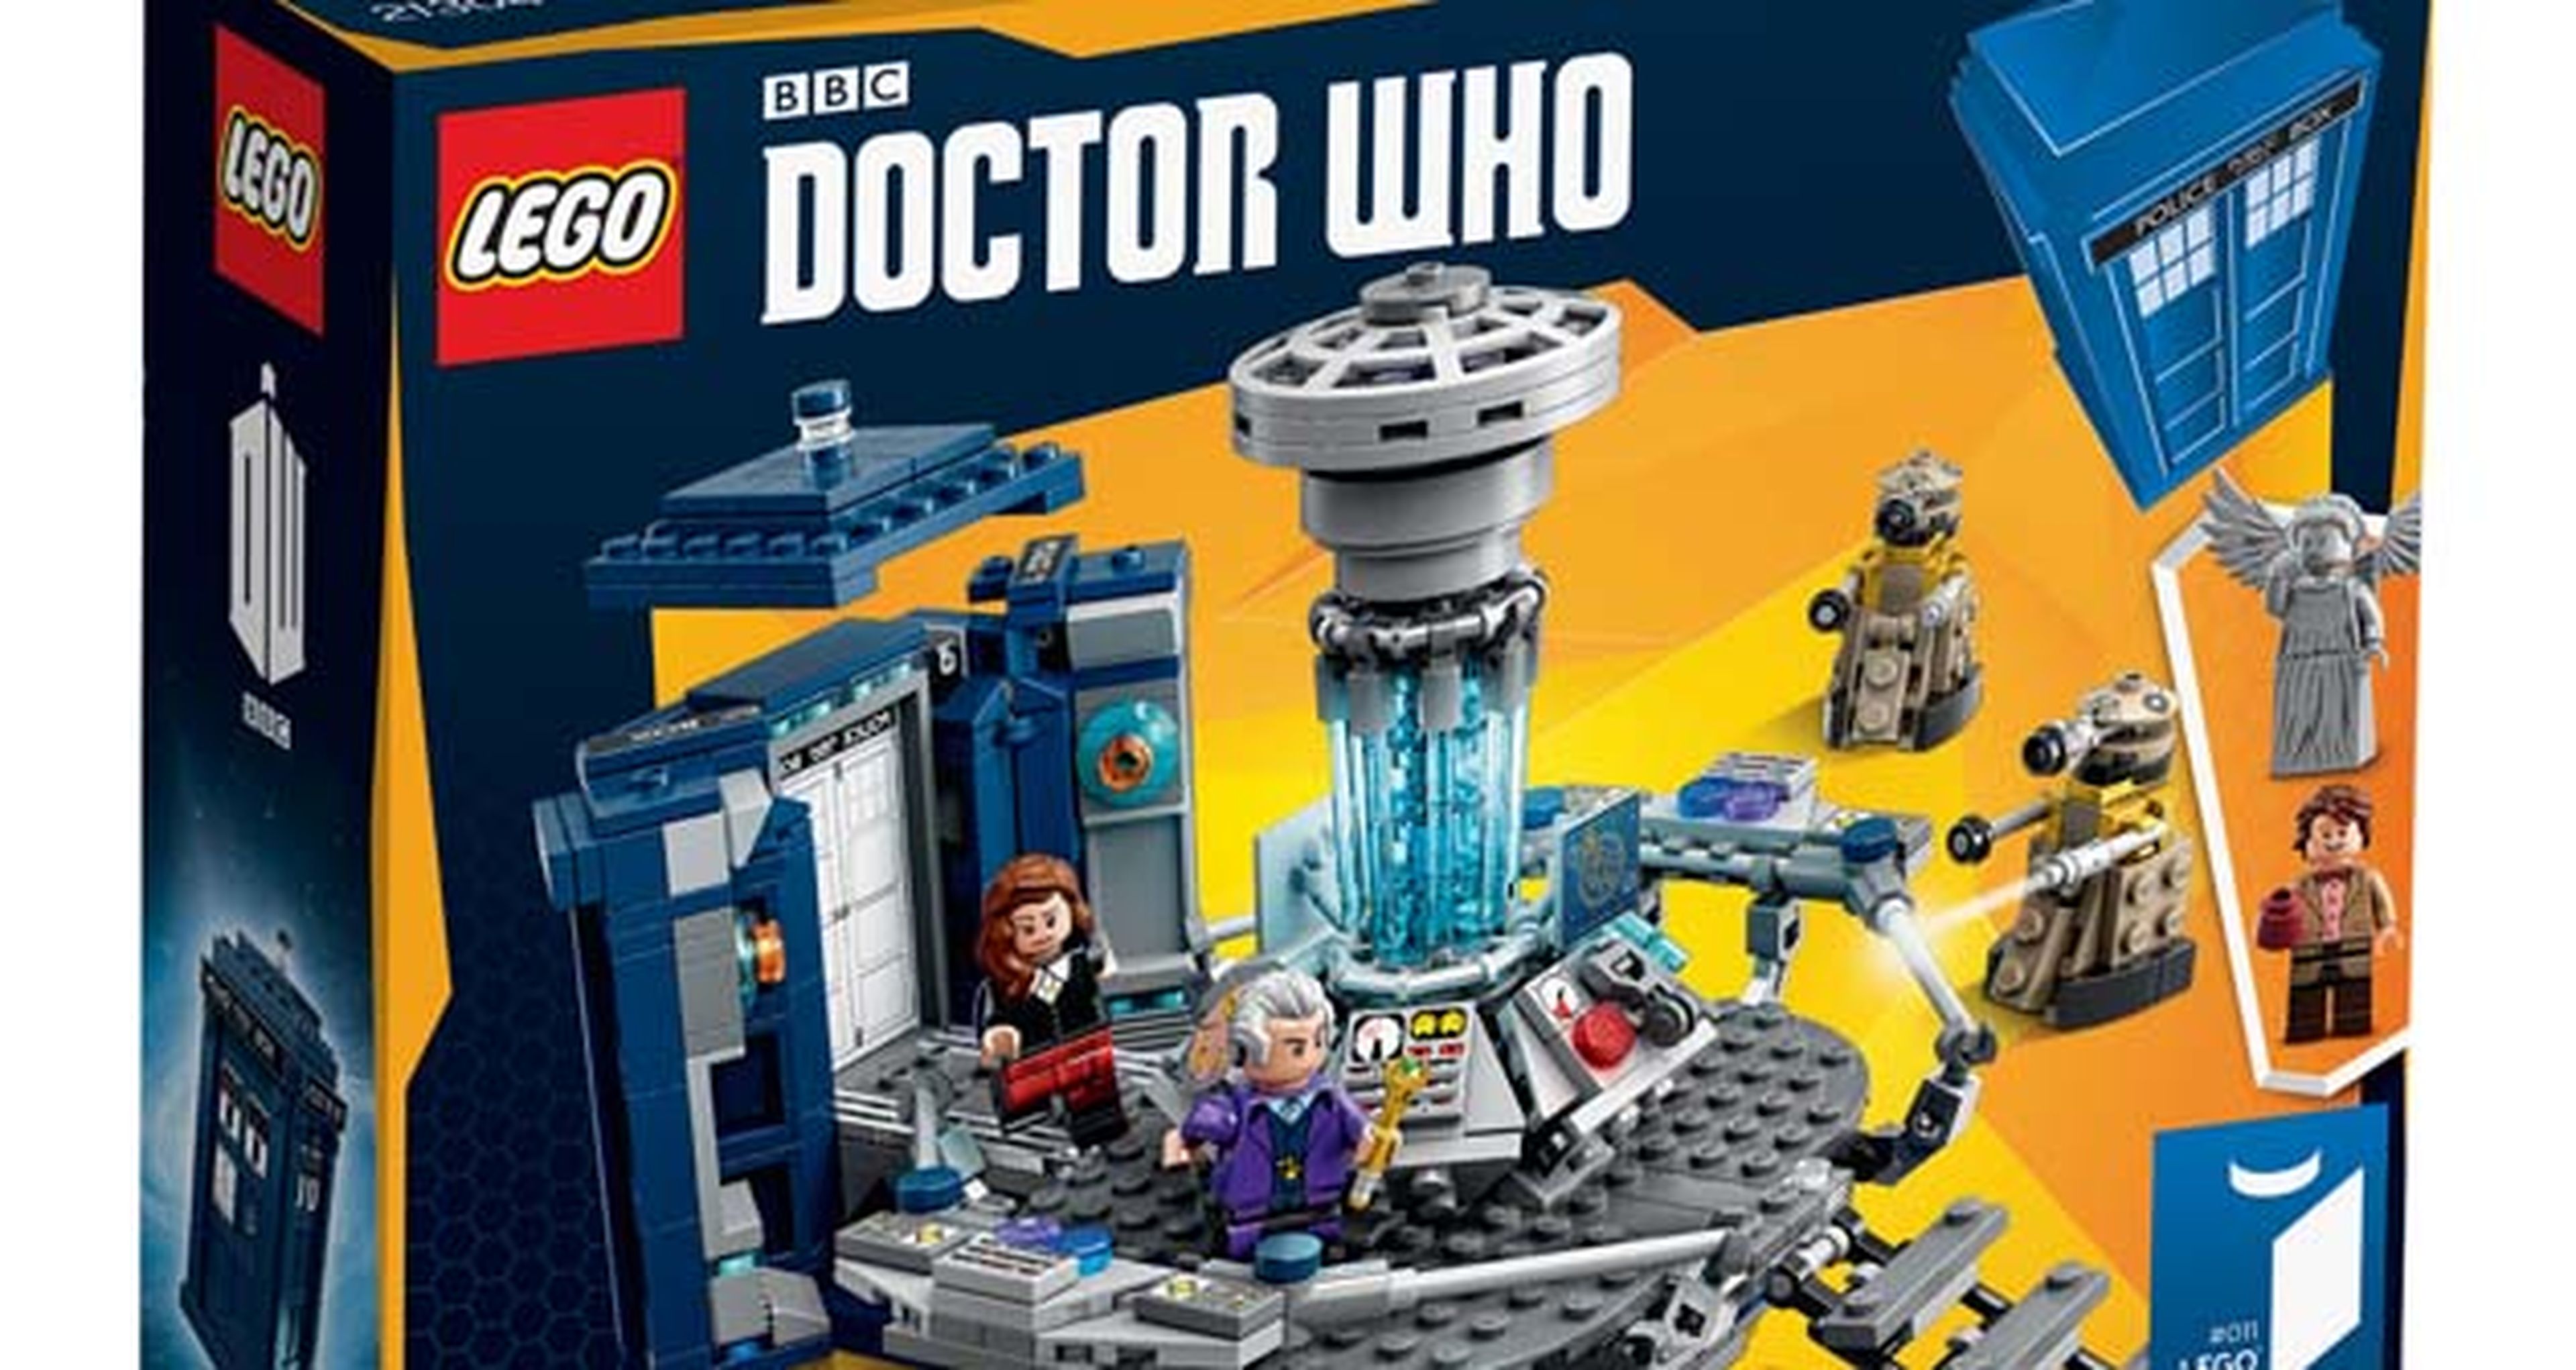 Doctor Who: LEGO revela su nuevo set